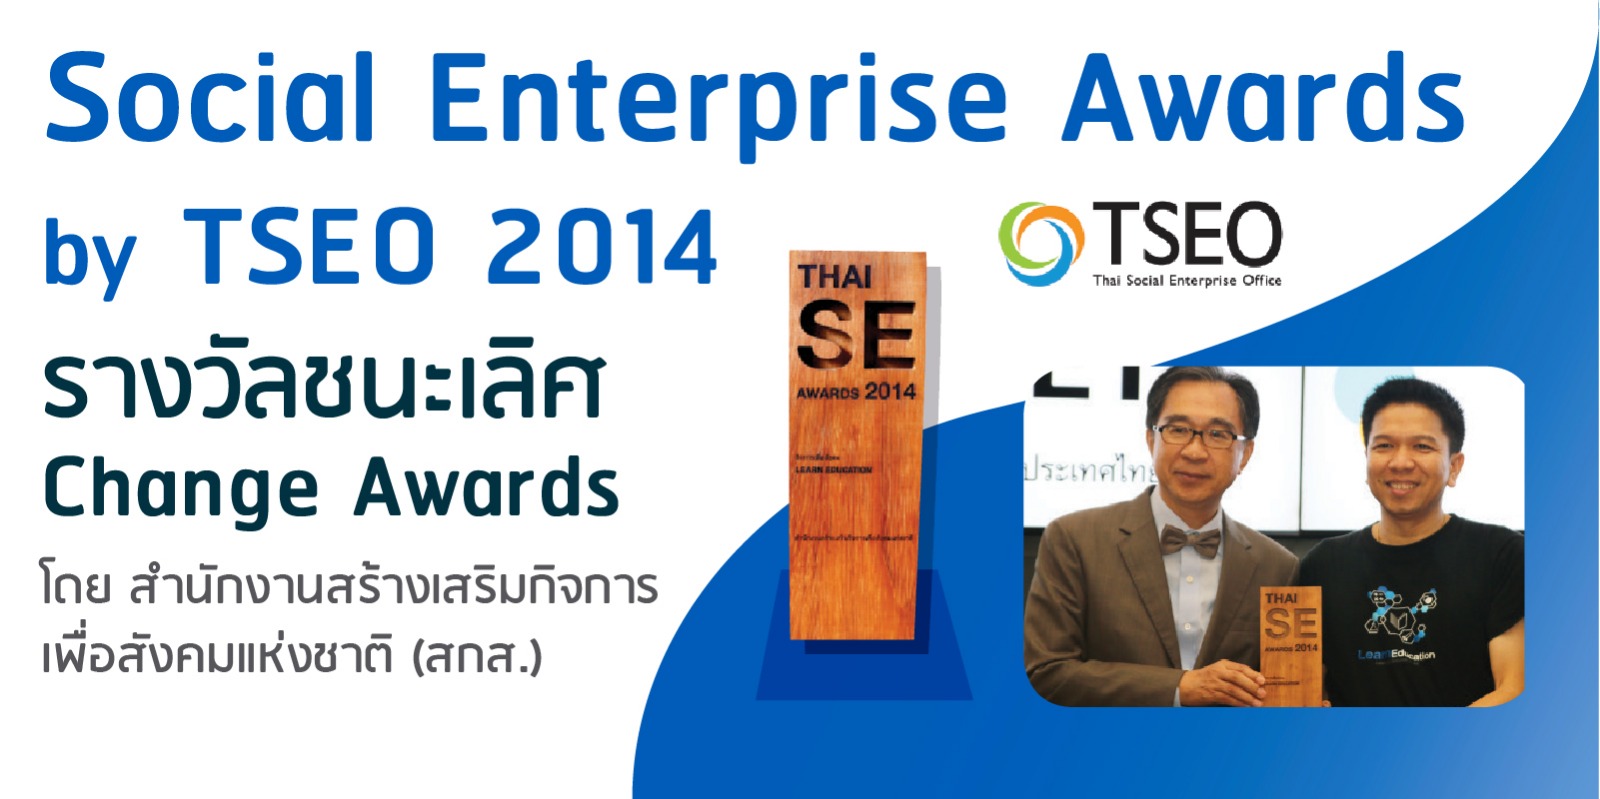 Social Enterprise Awards by TSEO 2014